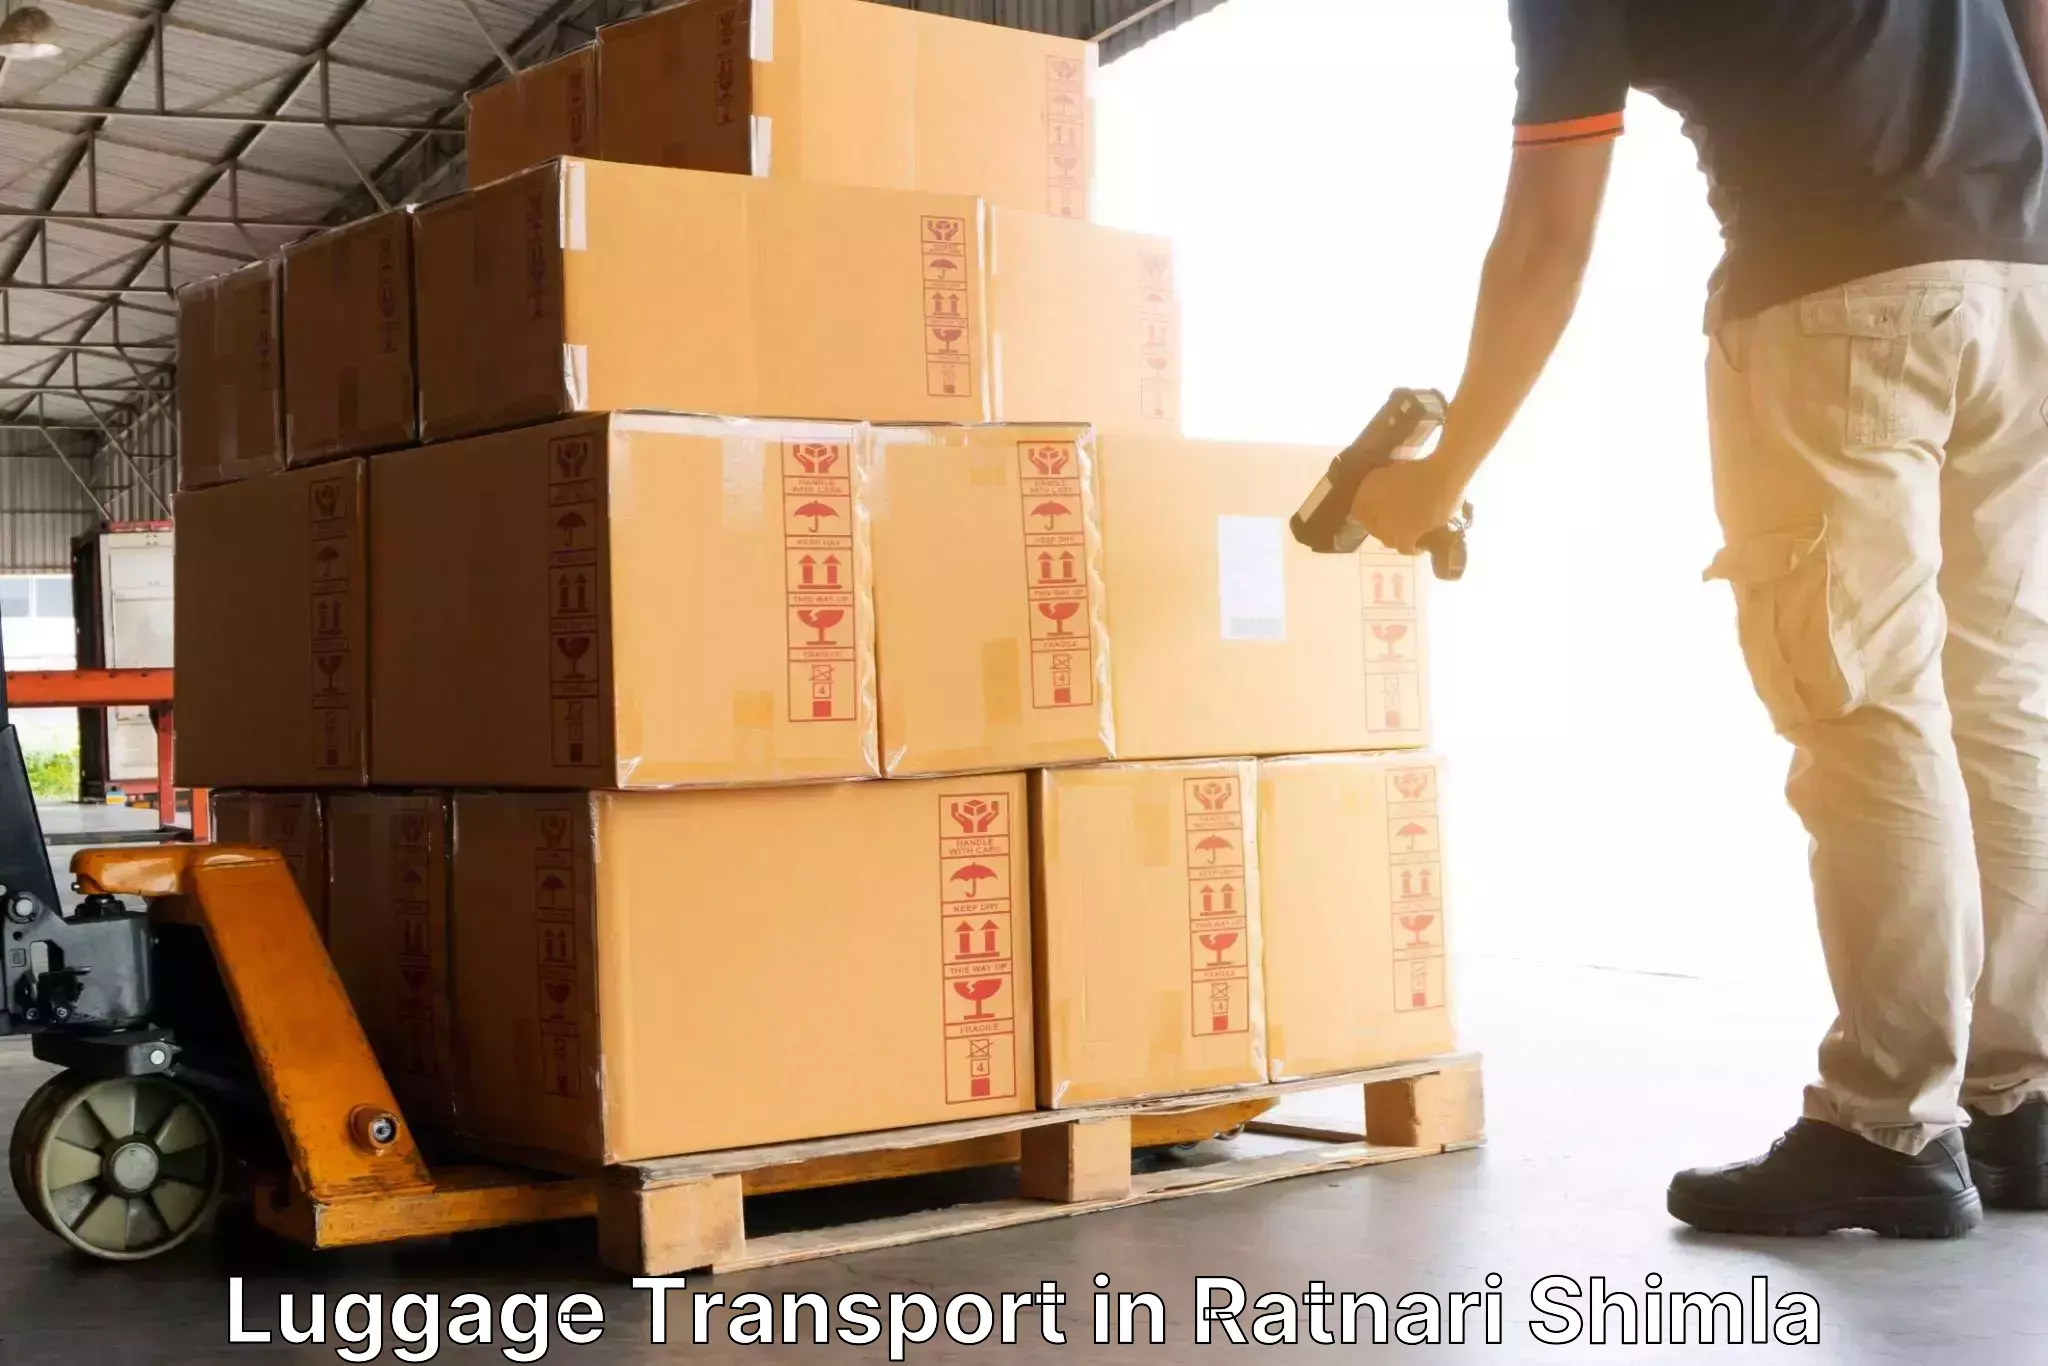 Baggage handling services in Ratnari Shimla